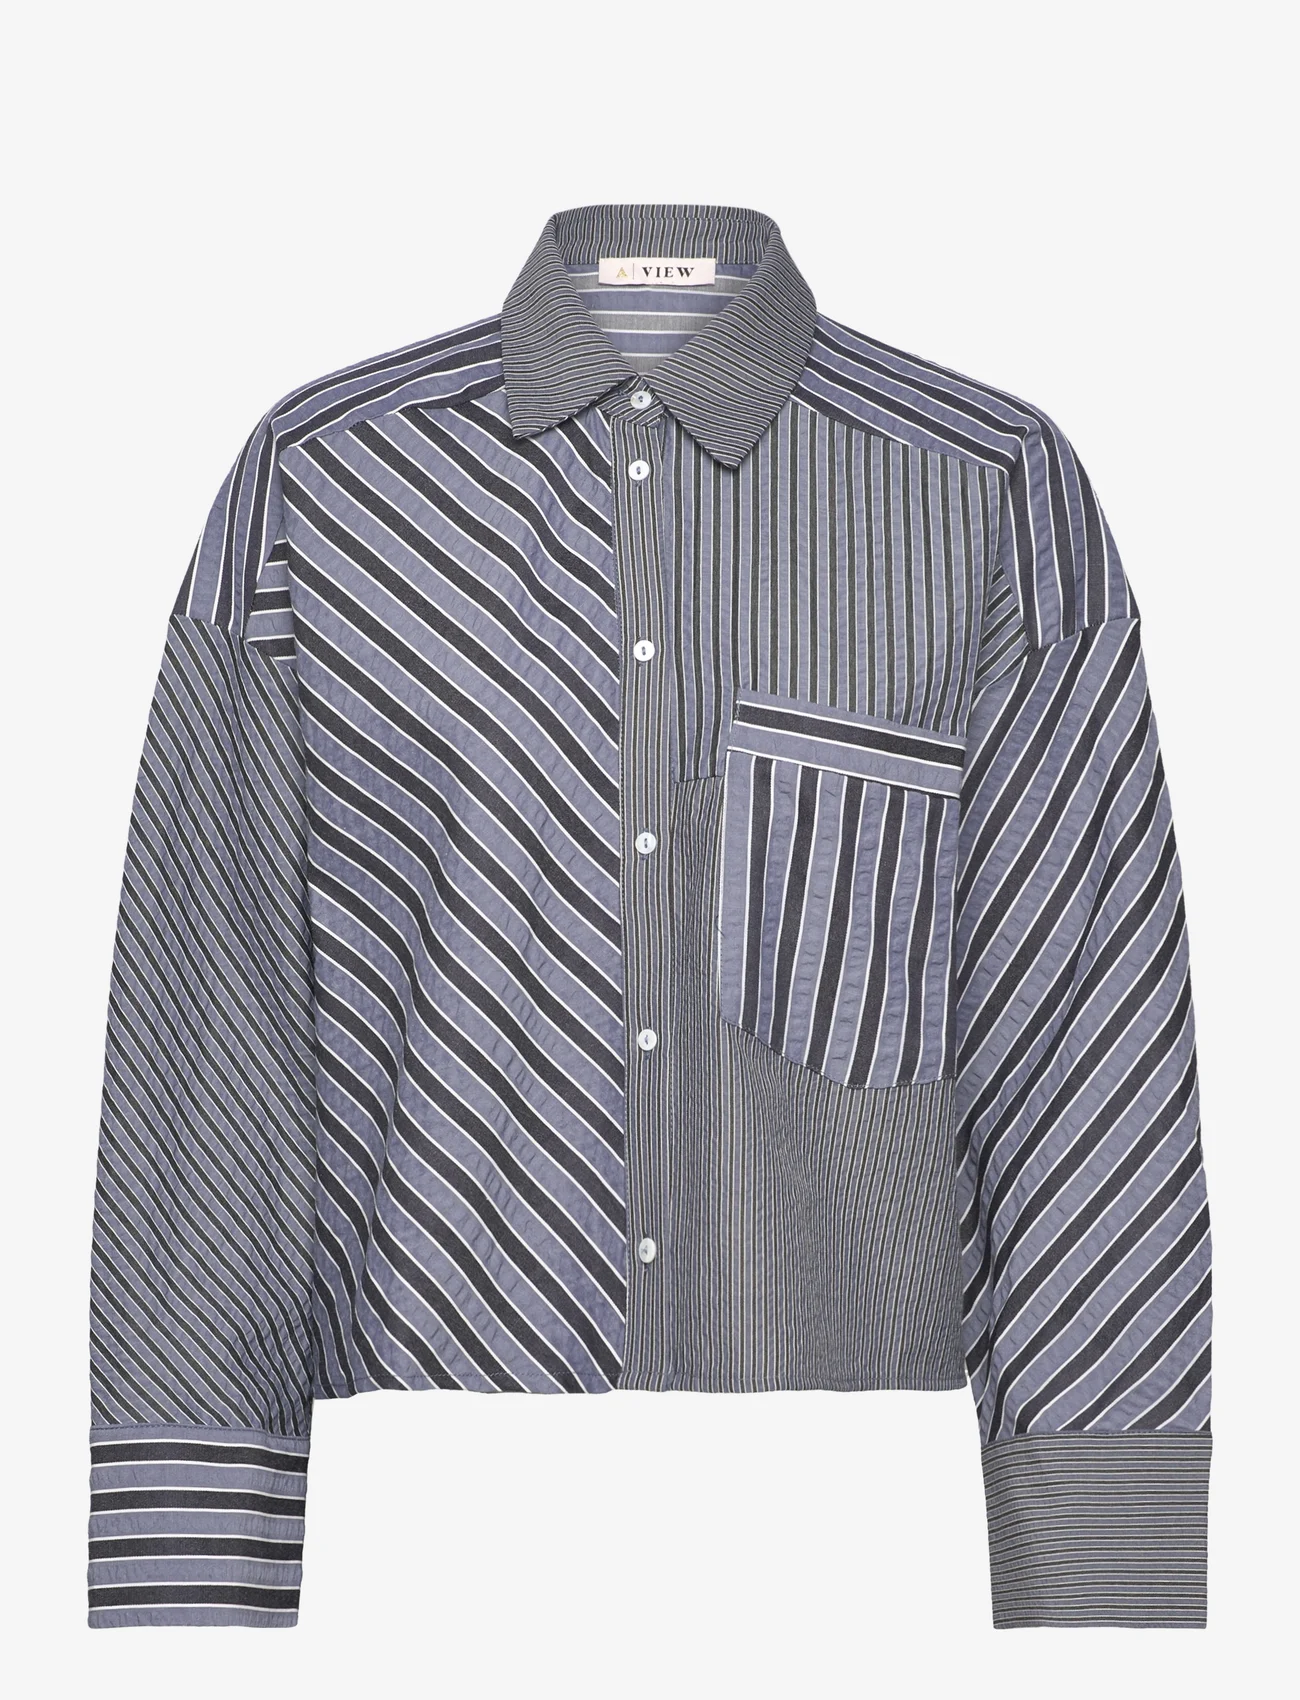 A-View - Mckenna Shirt - marškiniai ilgomis rankovėmis - blue/white stribe - 0